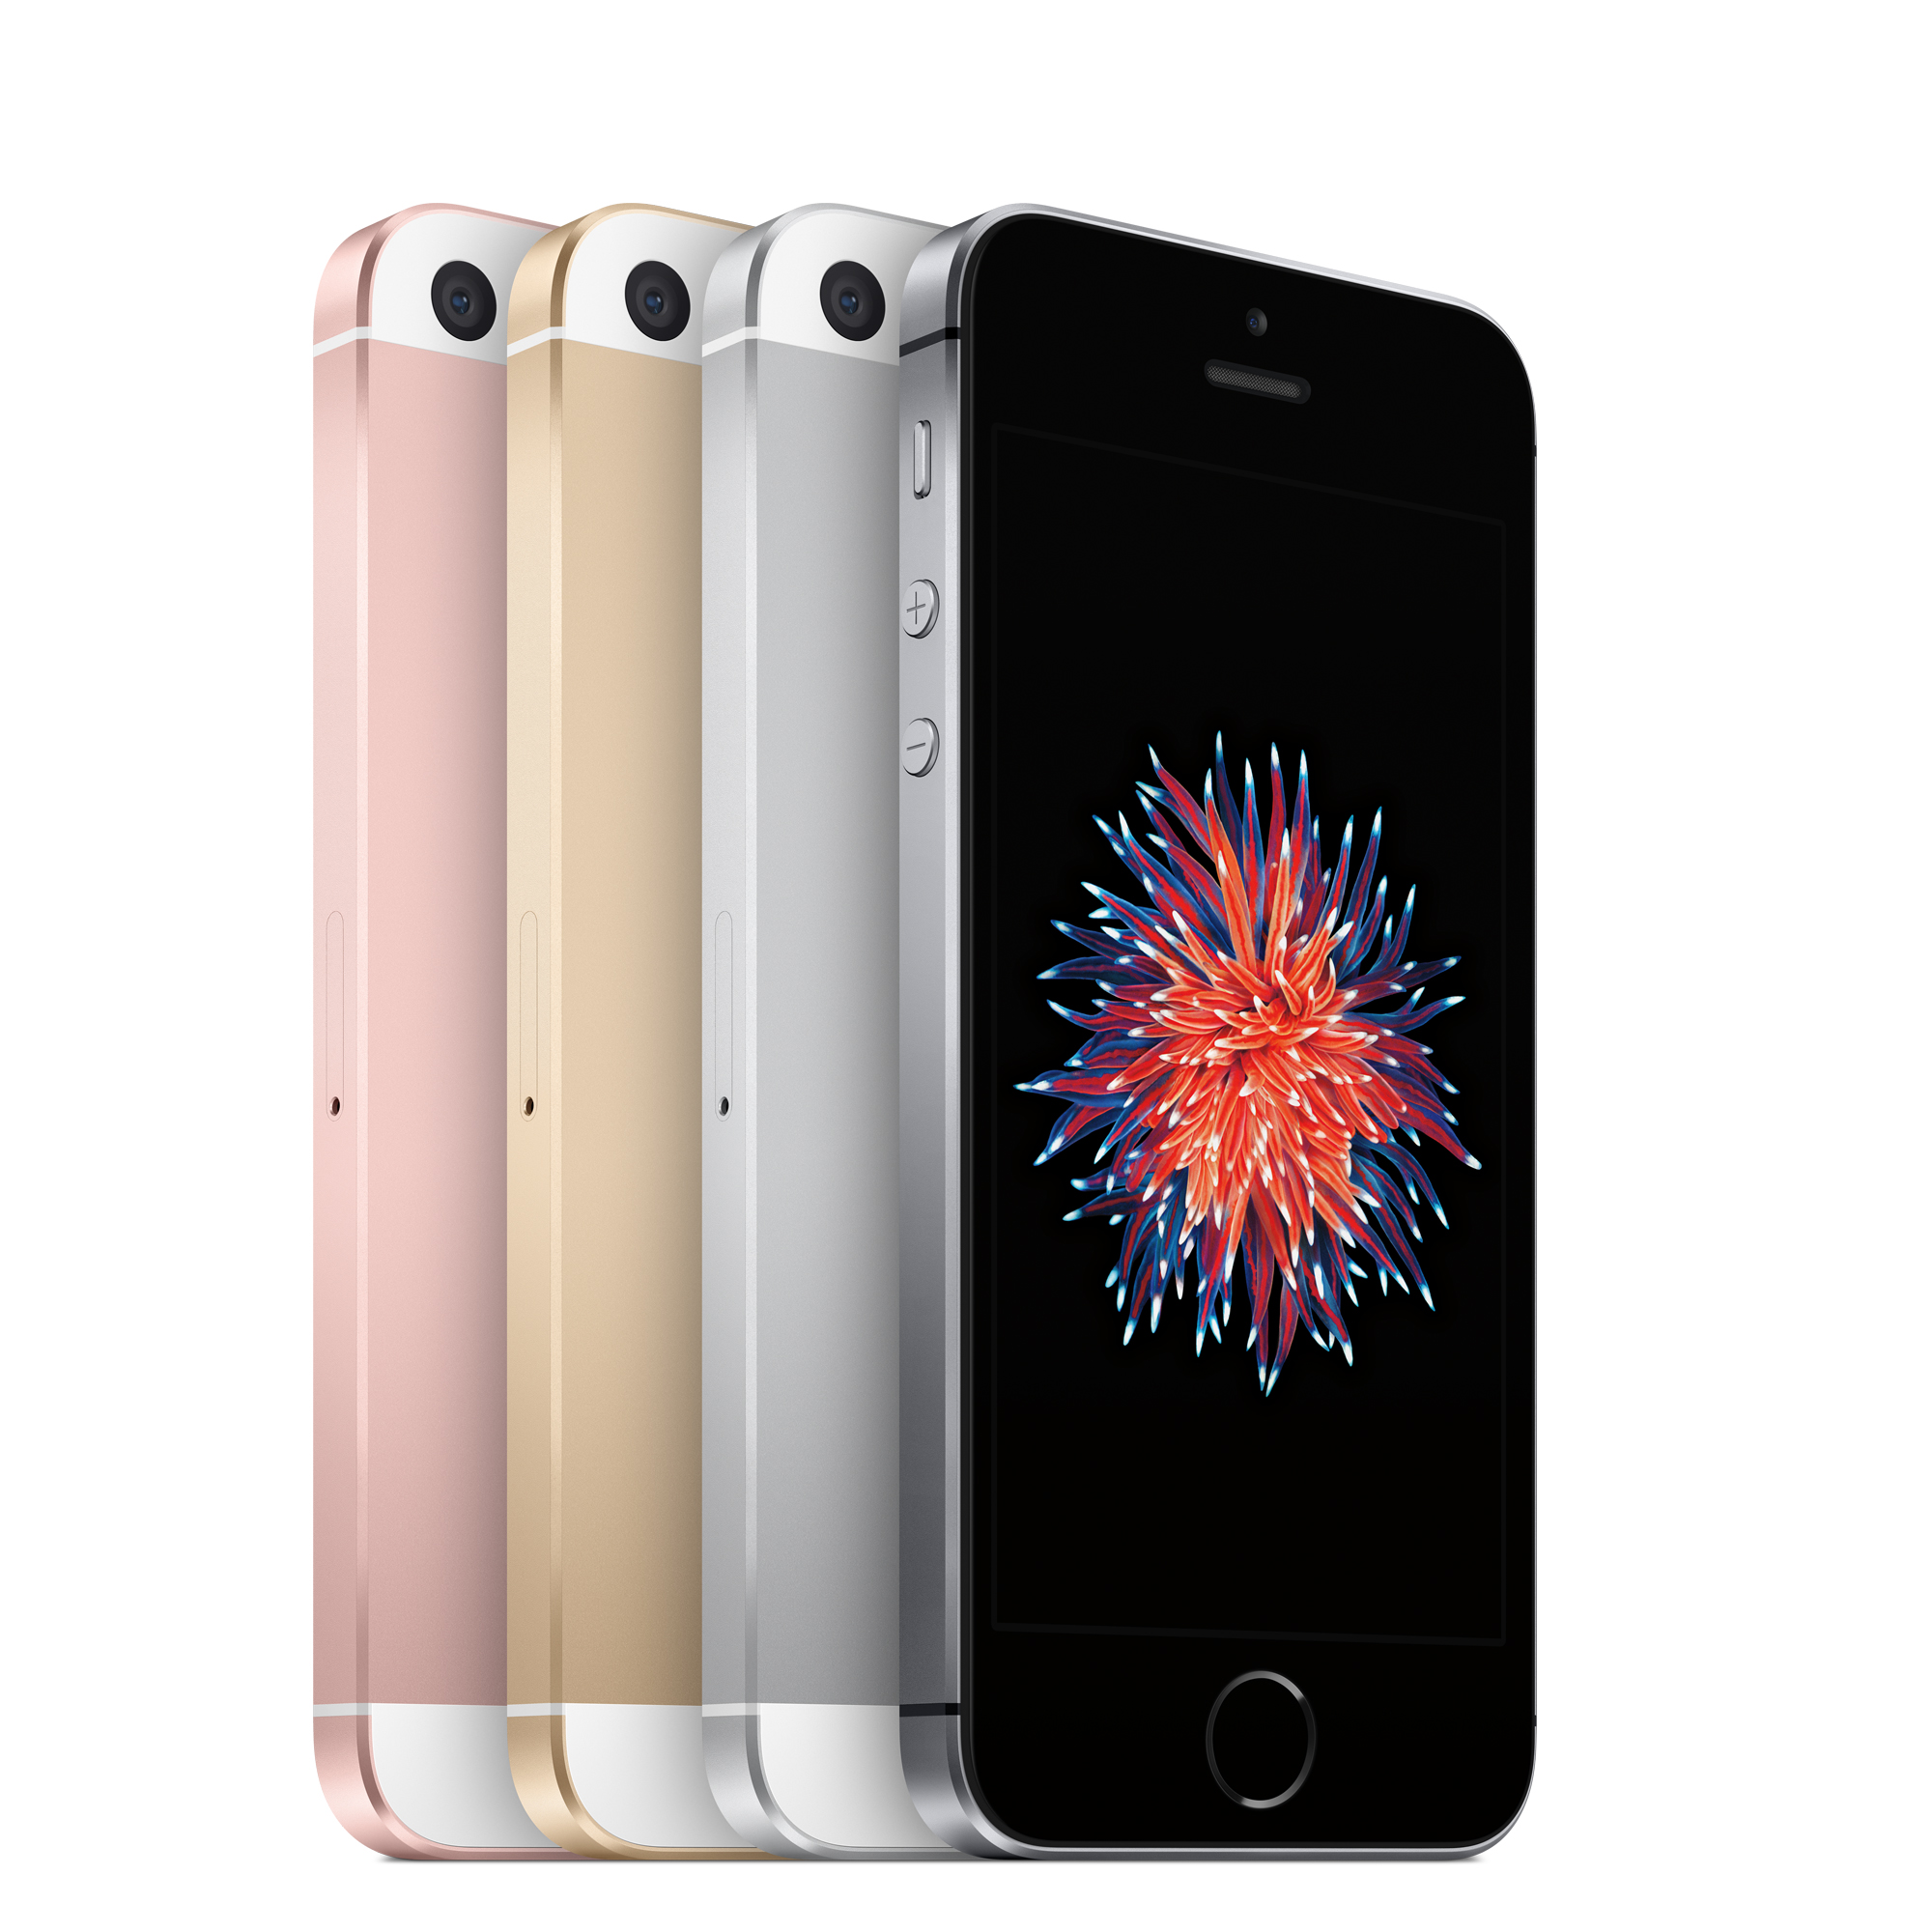 Straight Talk Apple iPhone SE, 32GB, Space Gray - Prepaid Smartphone - image 4 of 4